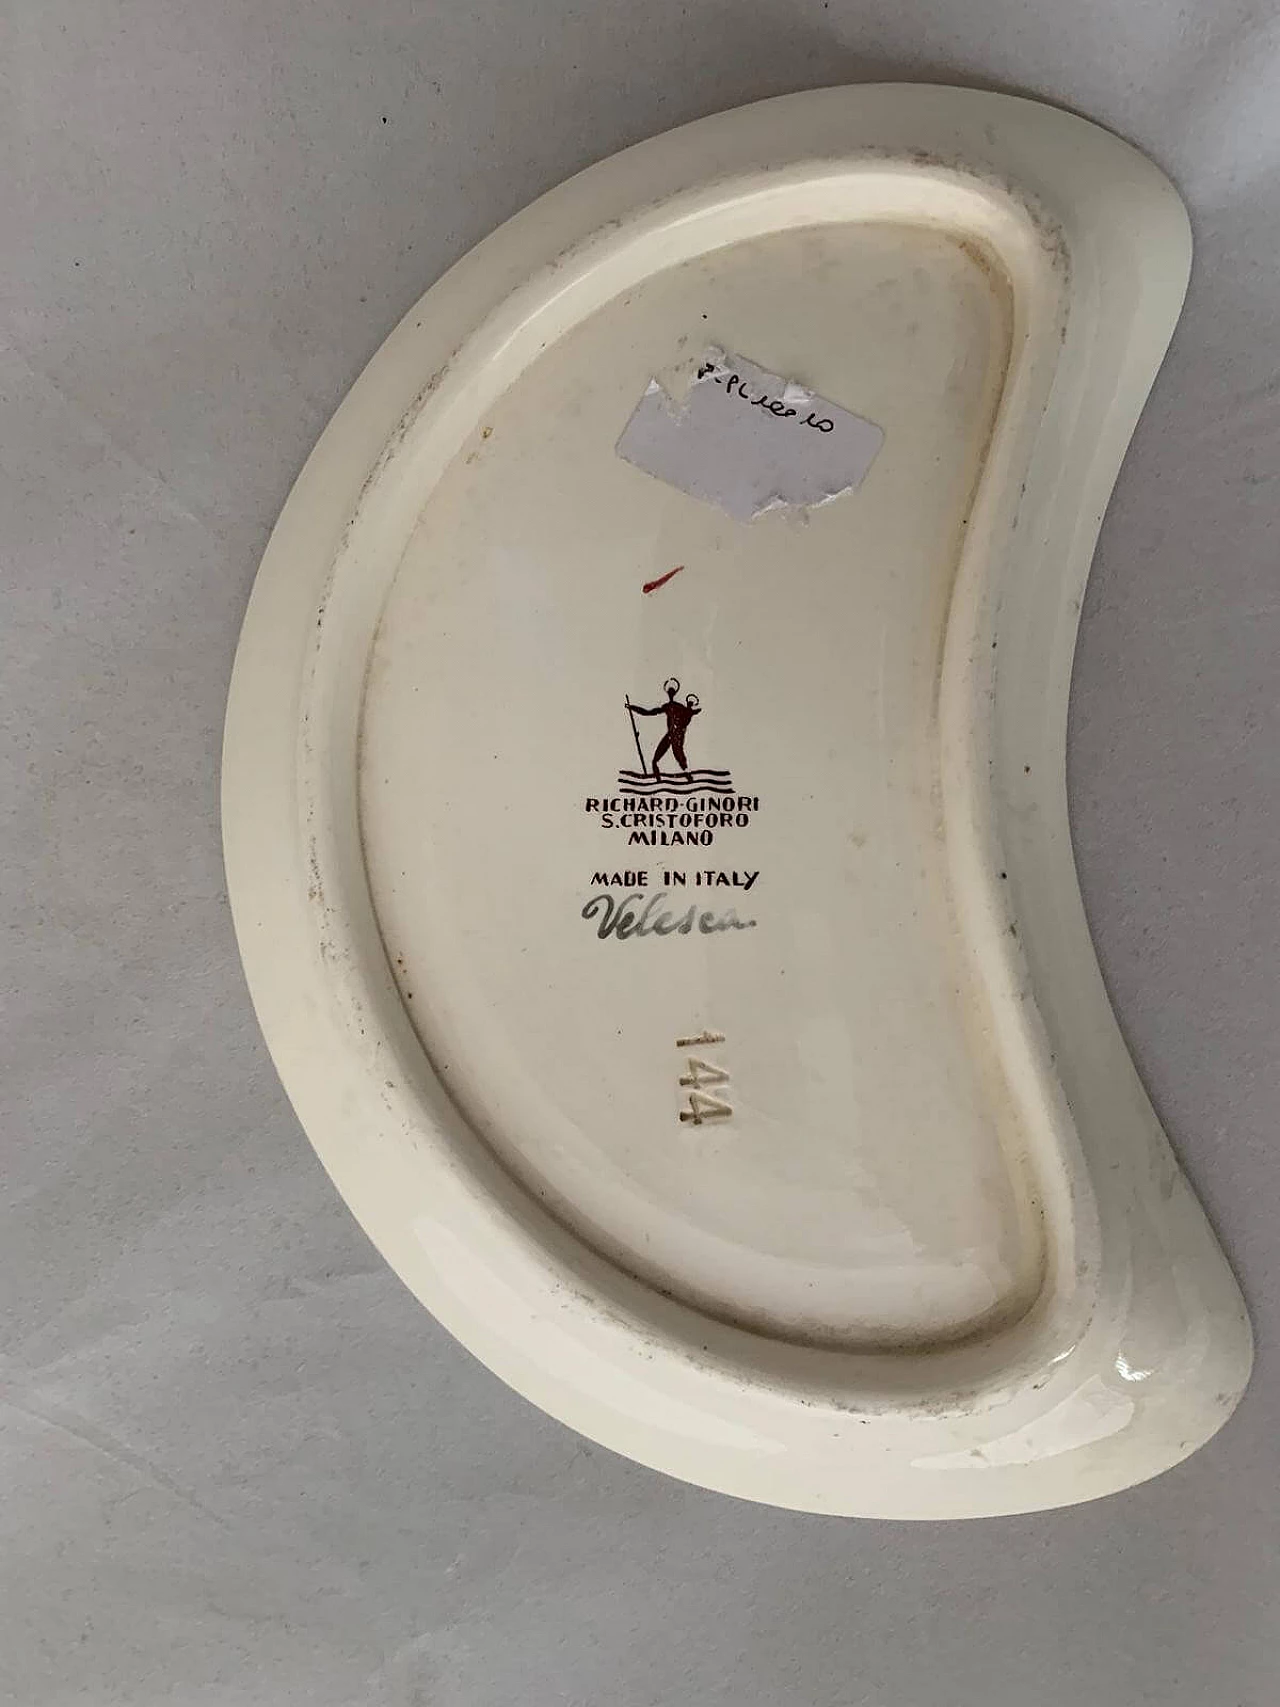 Ceramic bezel Velesca Gio Ponti for San Cristoforo Milano Richard Ginori, 1930s 1095465